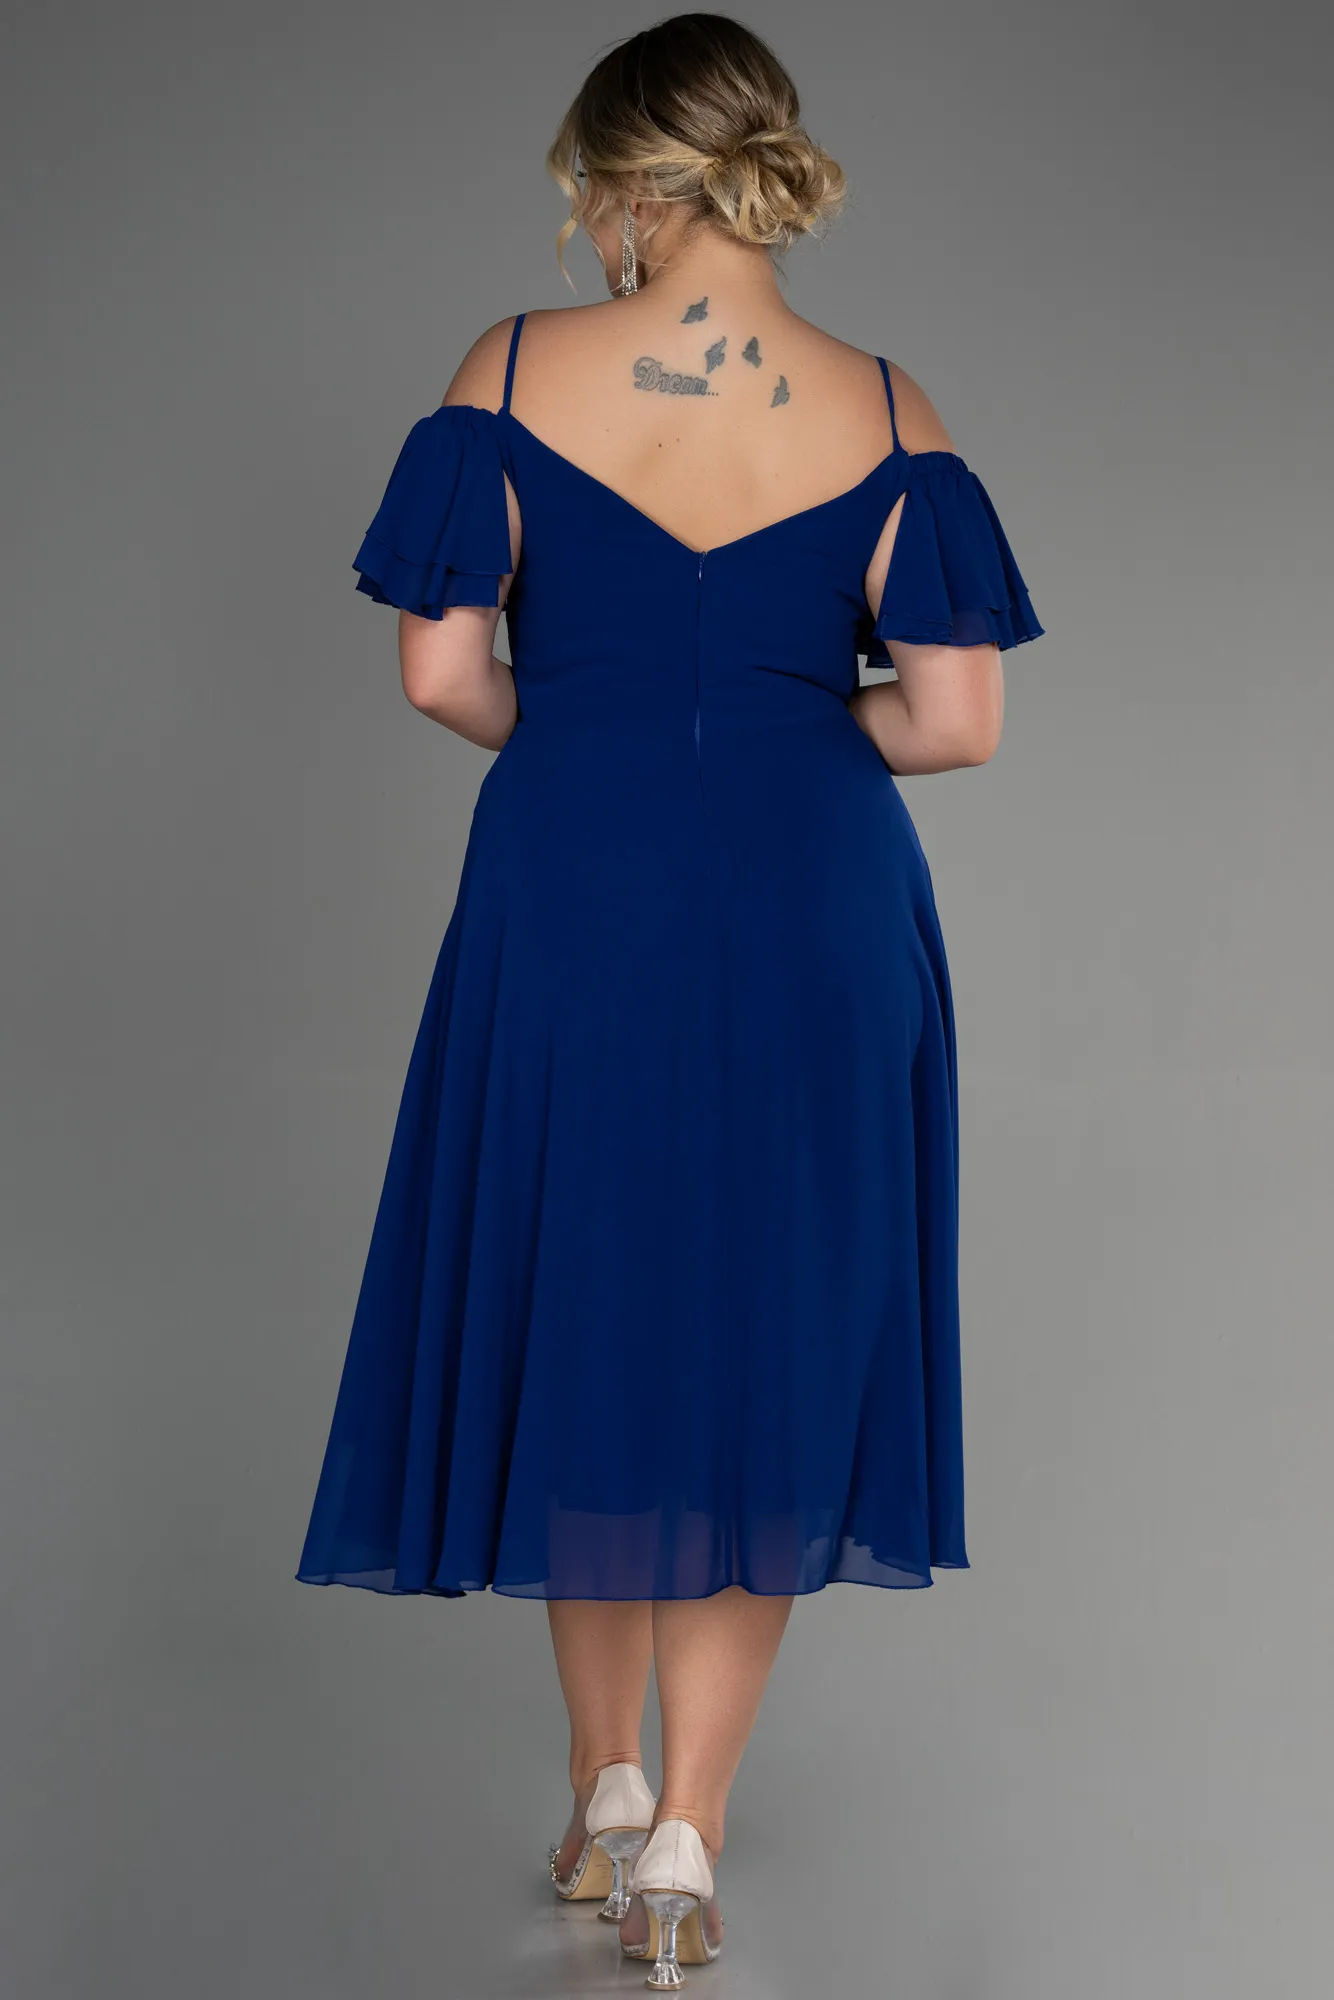 Sax Blue-Midi Chiffon Plus Size Evening Dress ABK1475